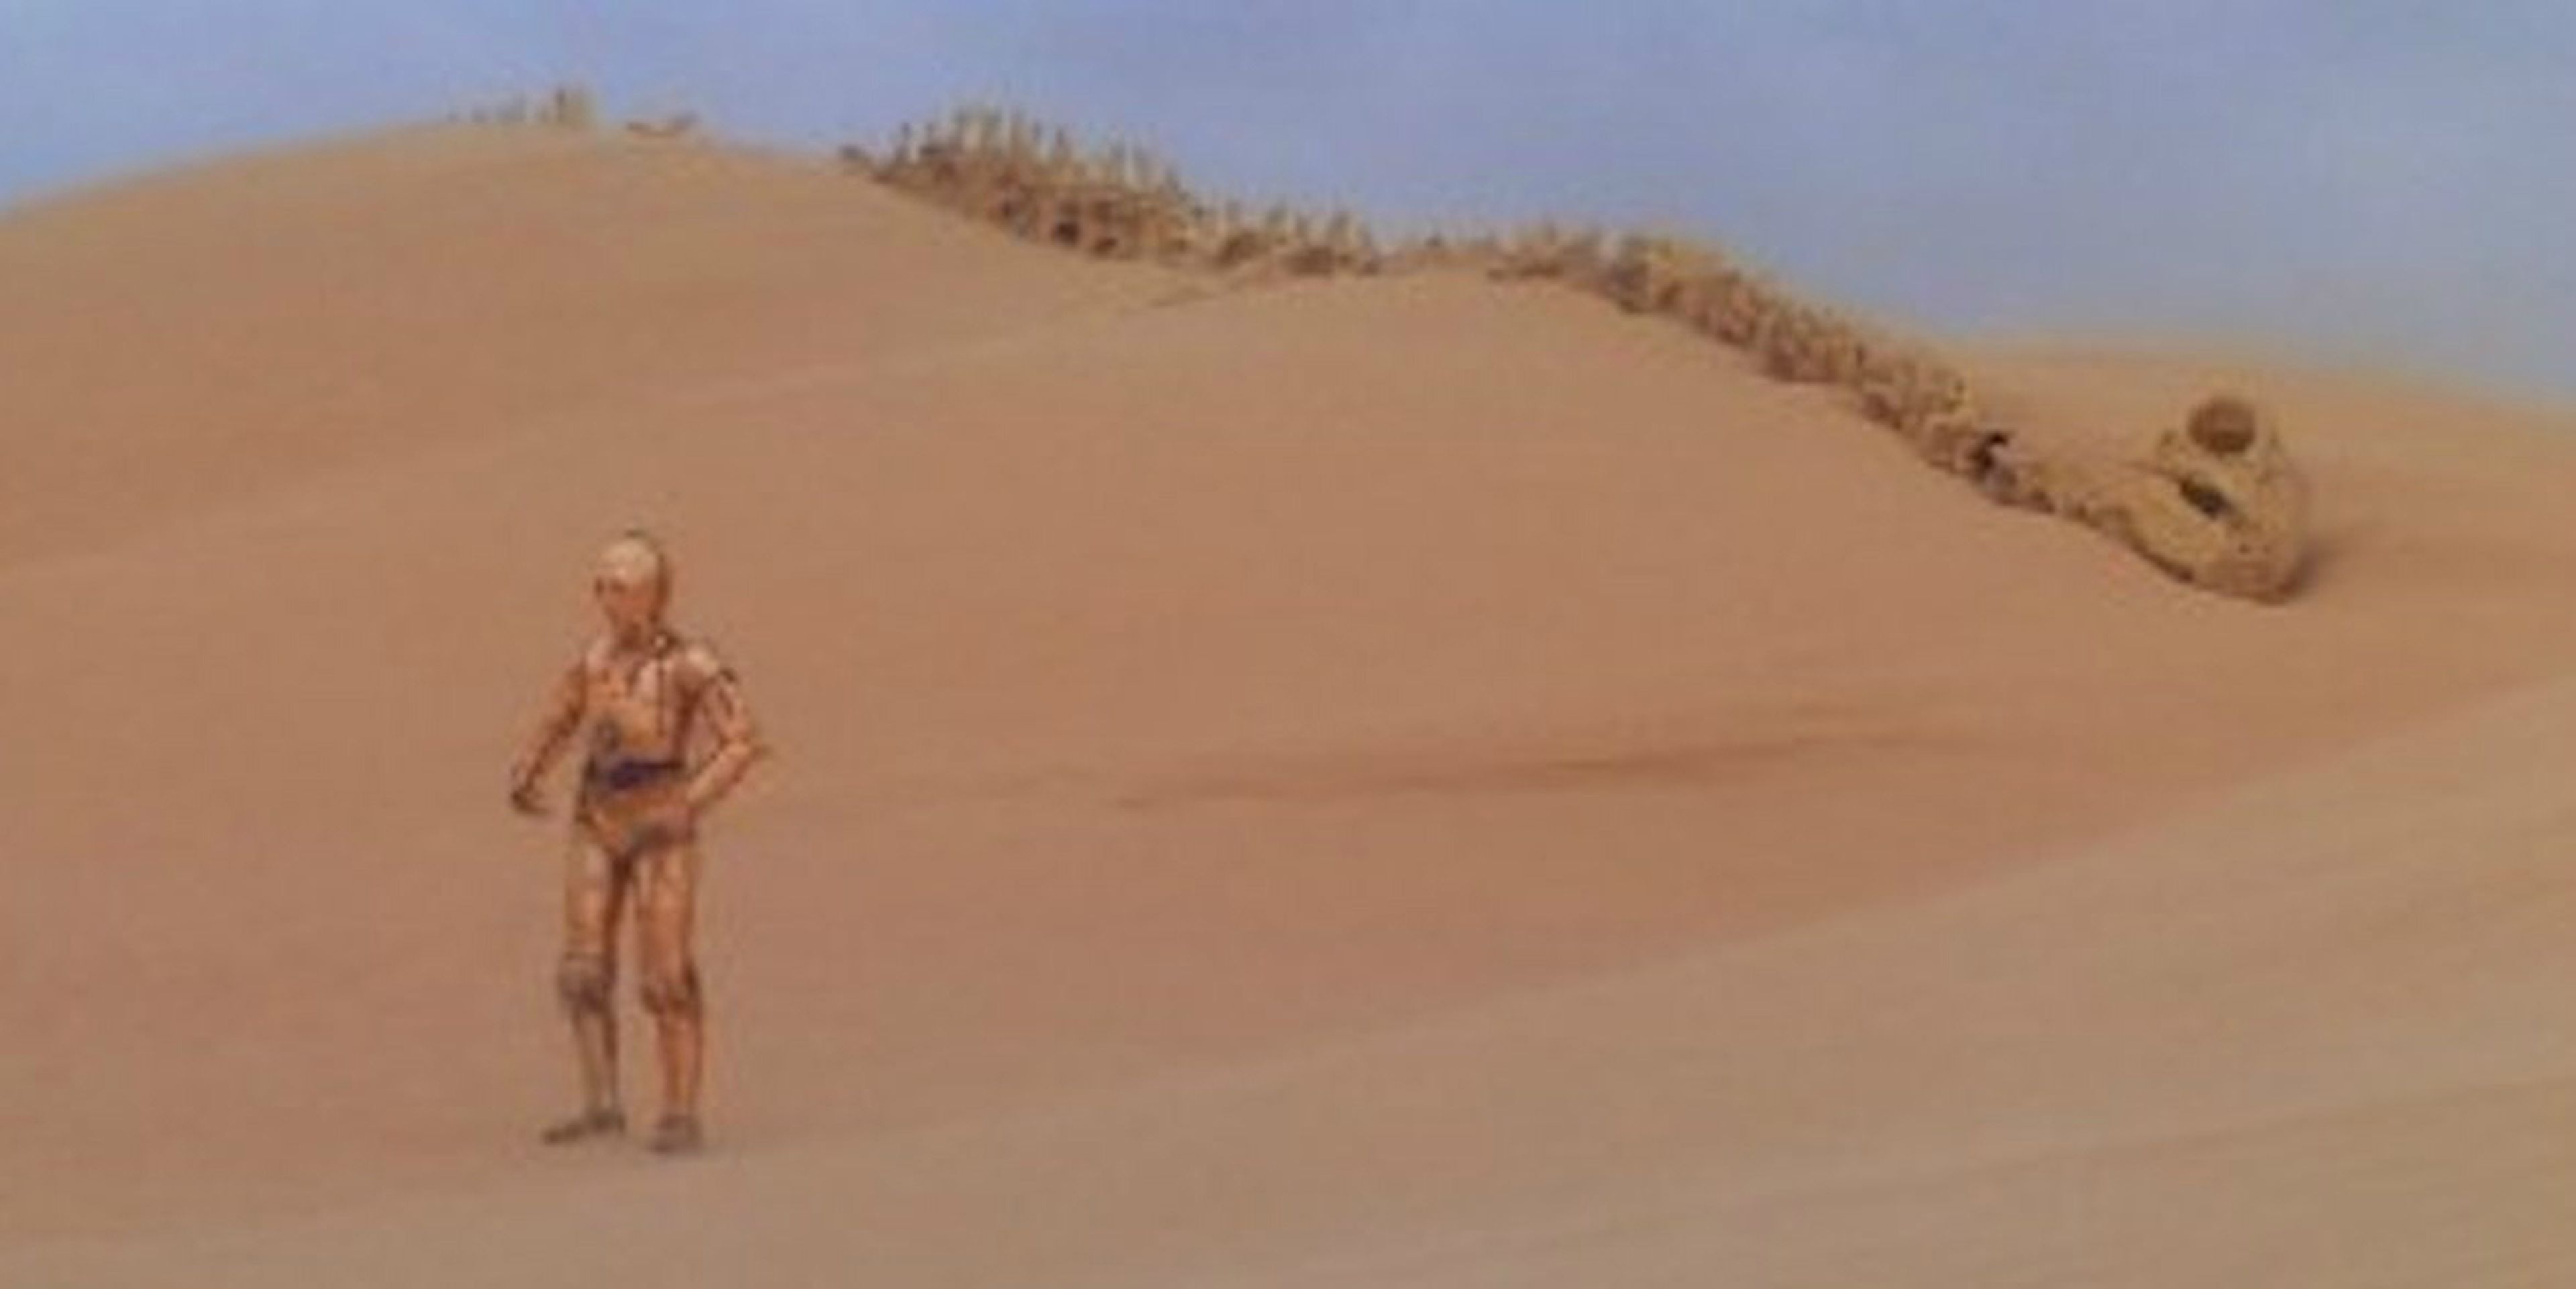 STAR WARS VIAJES-C3PO-Tatooine